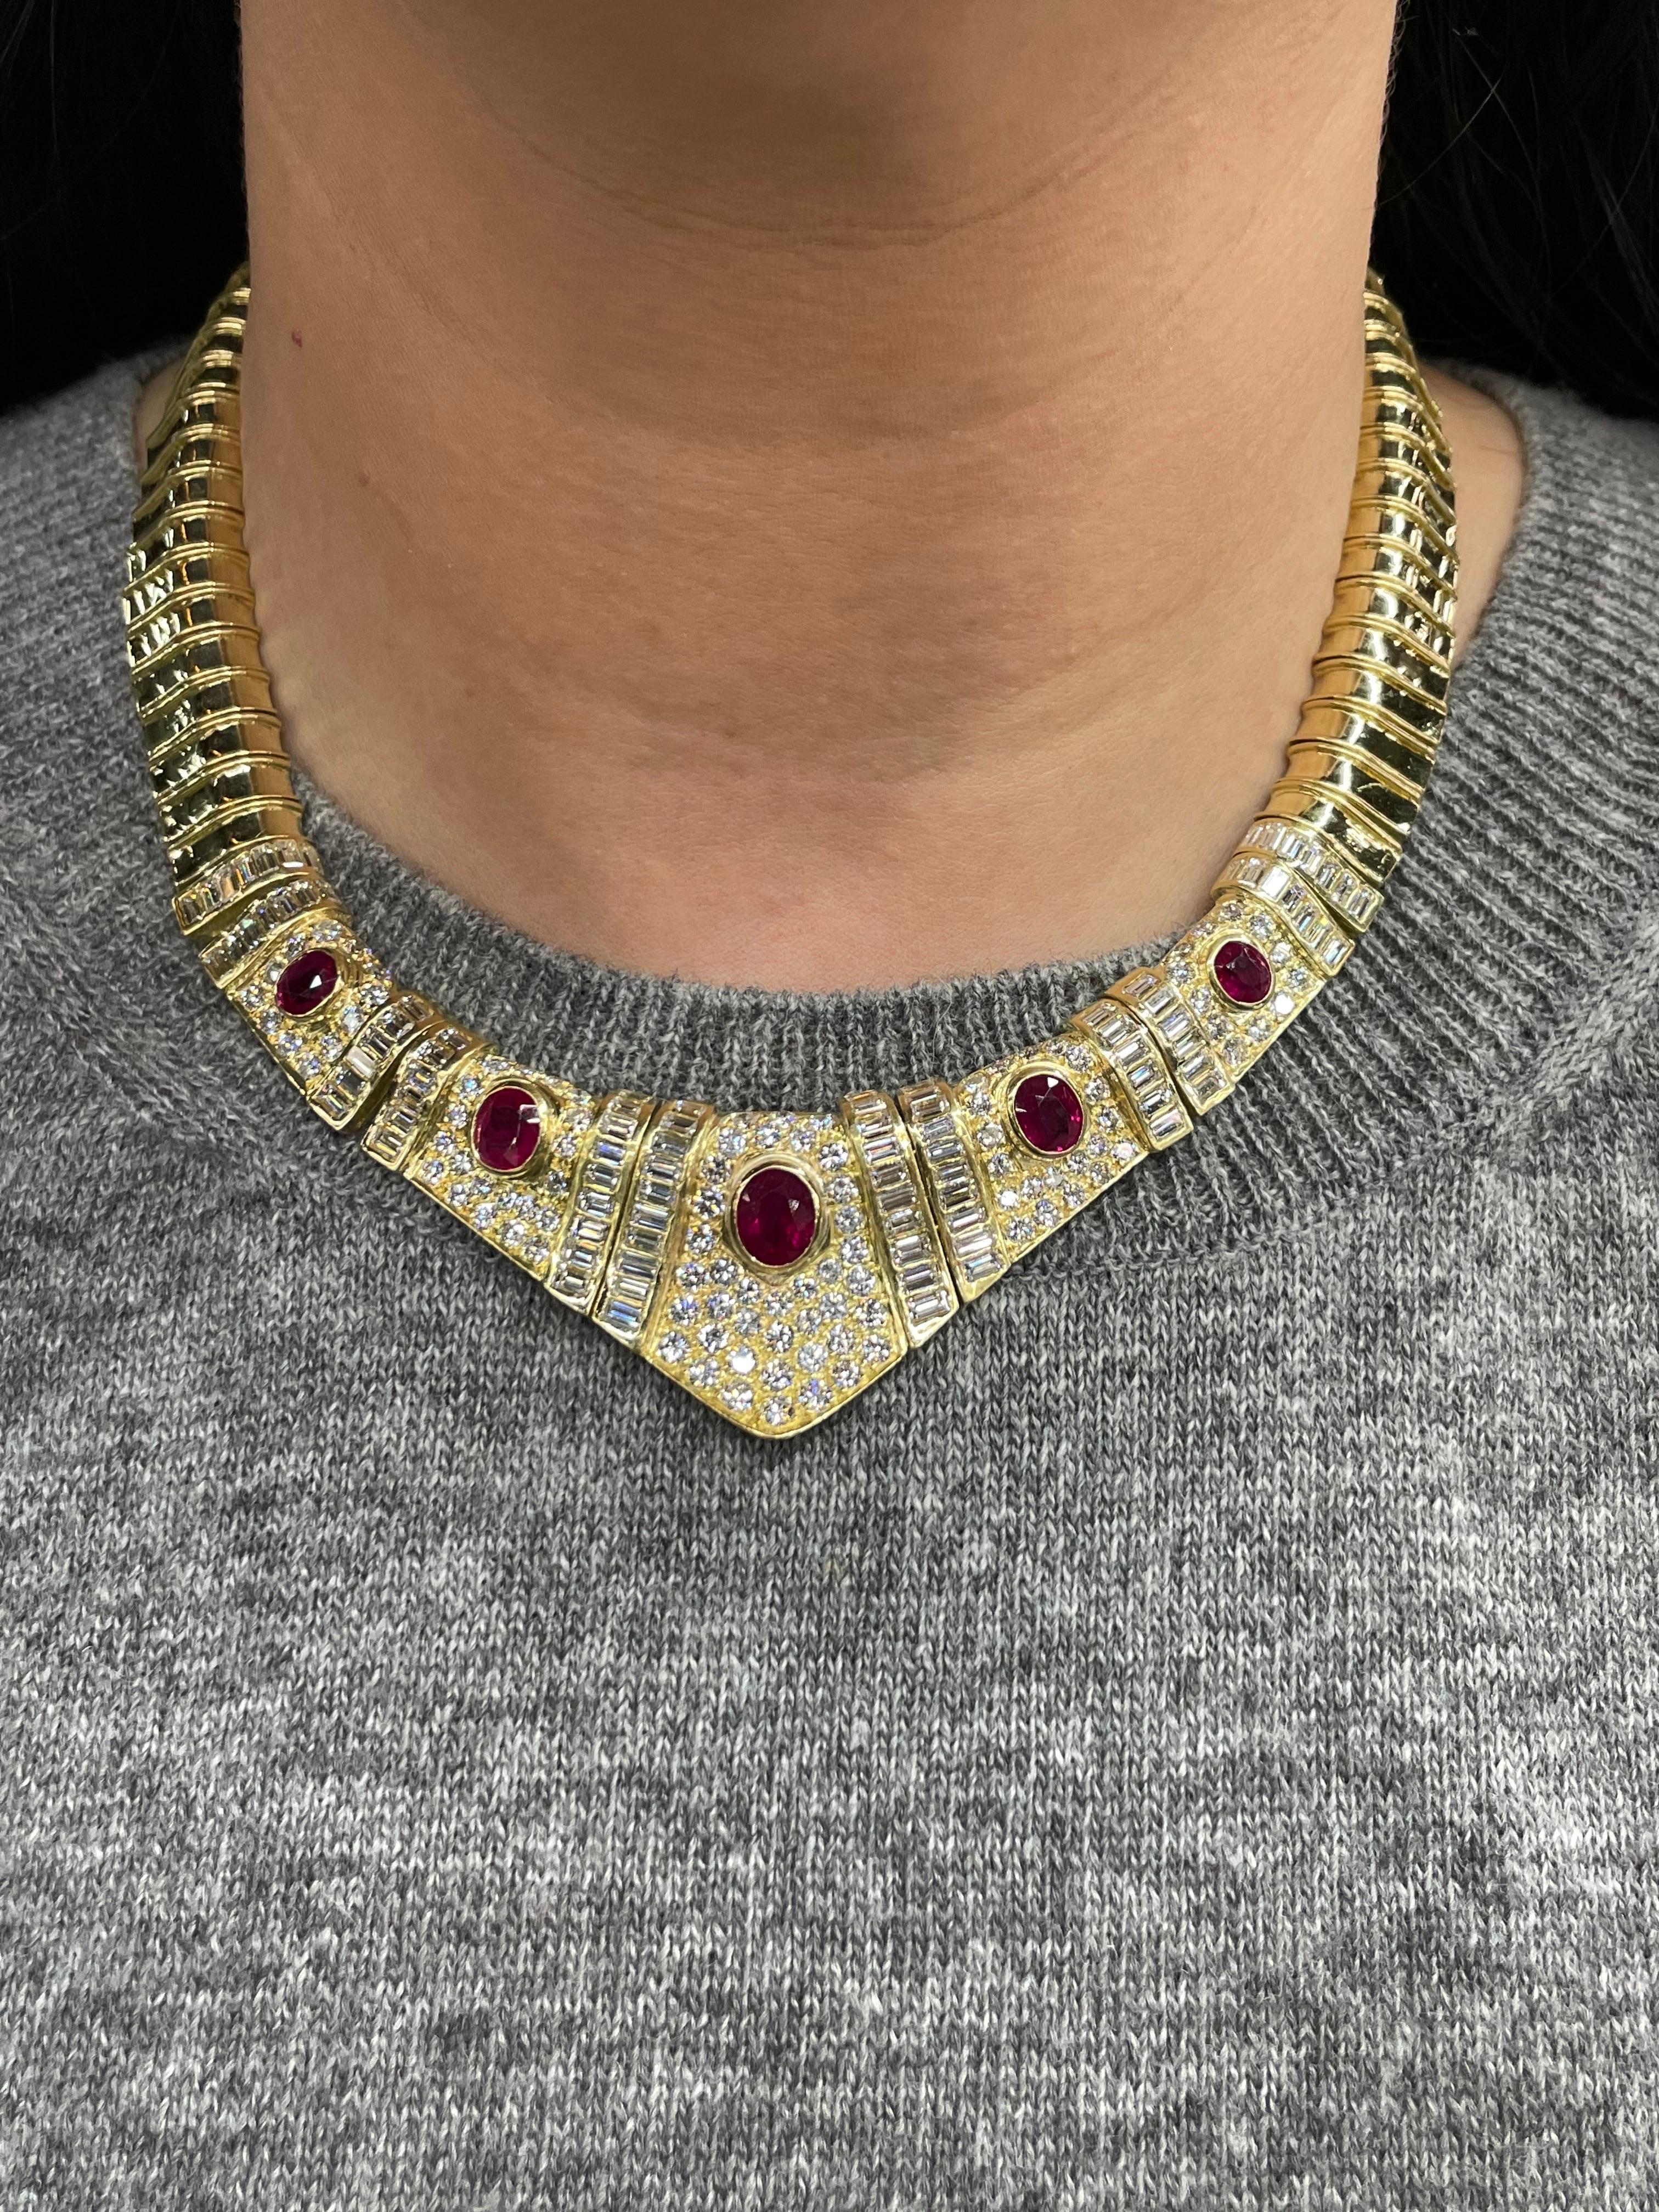 Certified Burma Ruby Diamond Collar Necklace 24.50 Carats 18 Karat Yellow Gold For Sale 5